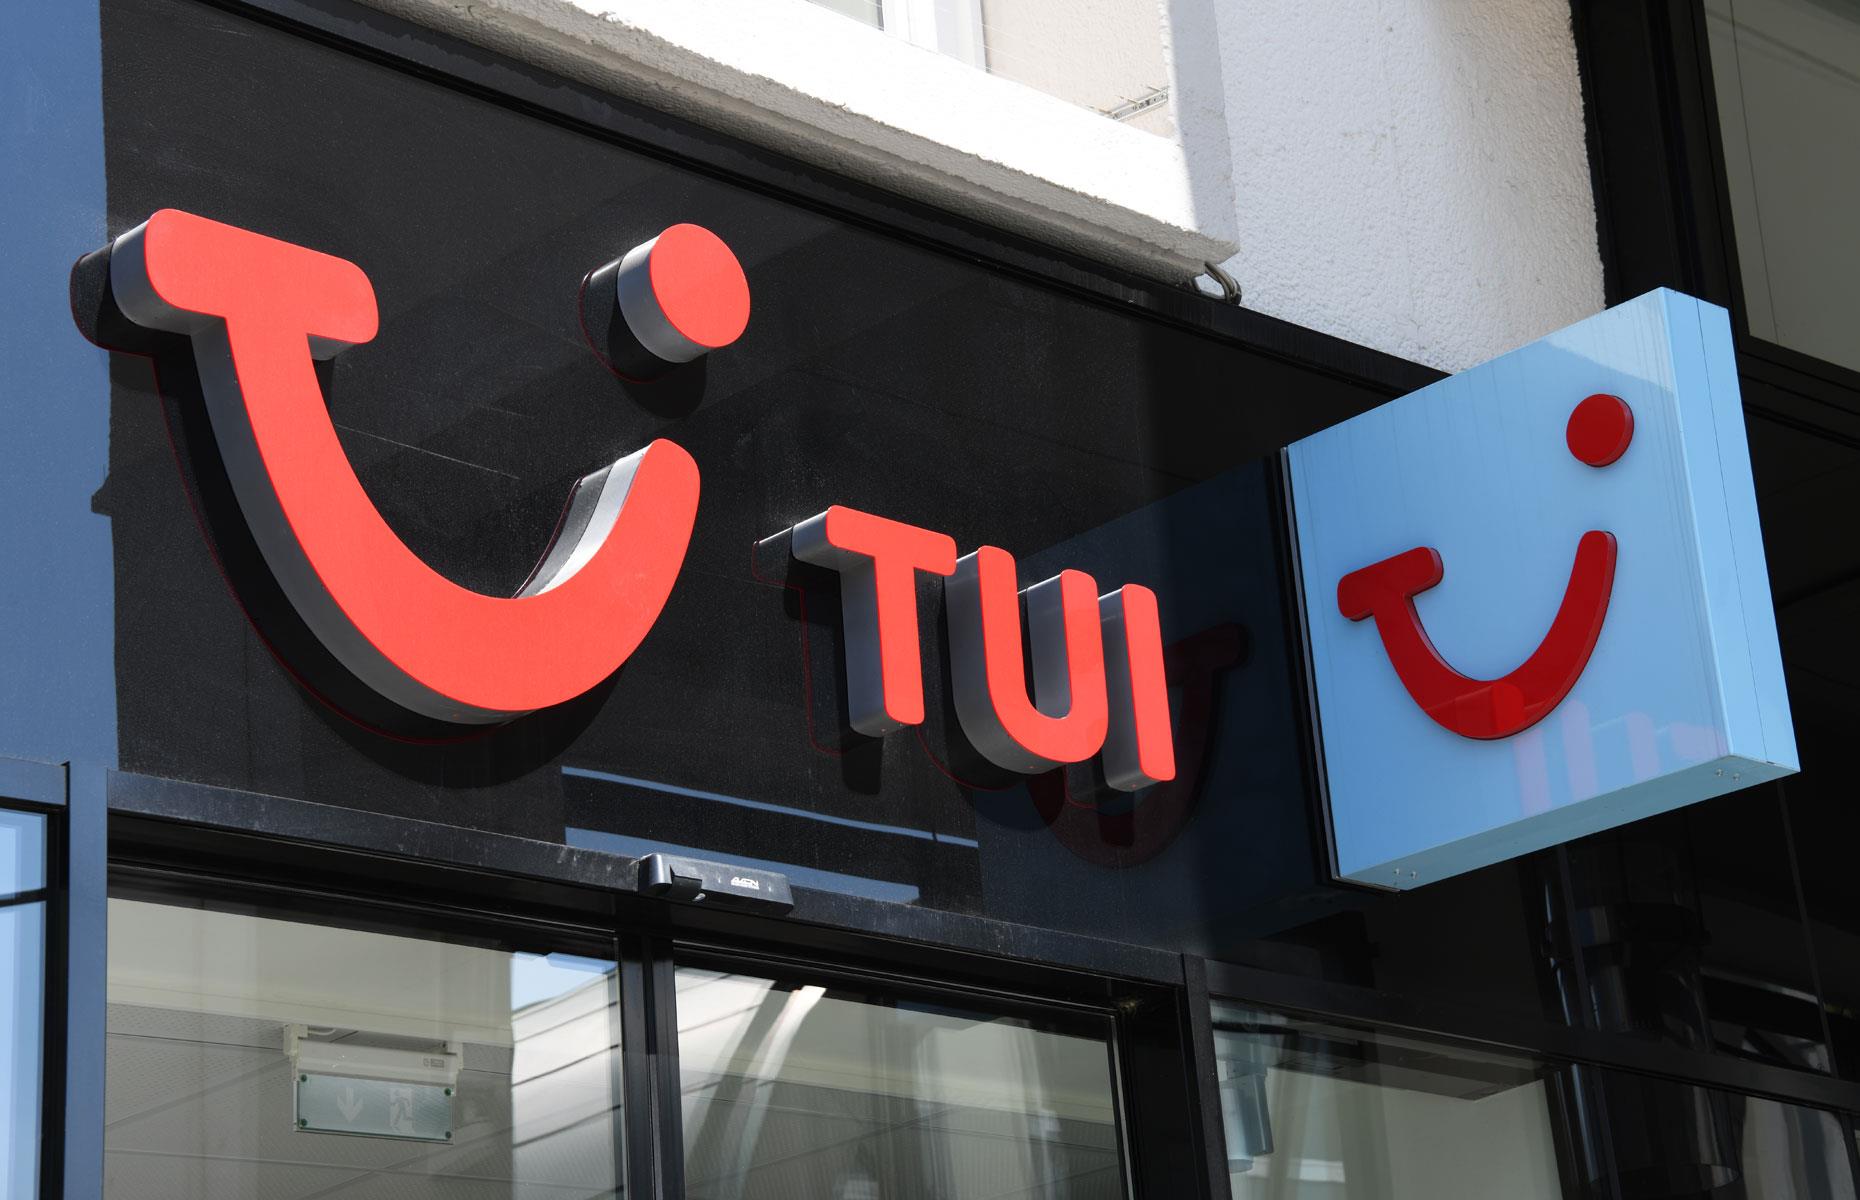 TUI: $4 billion (£3.2bn)